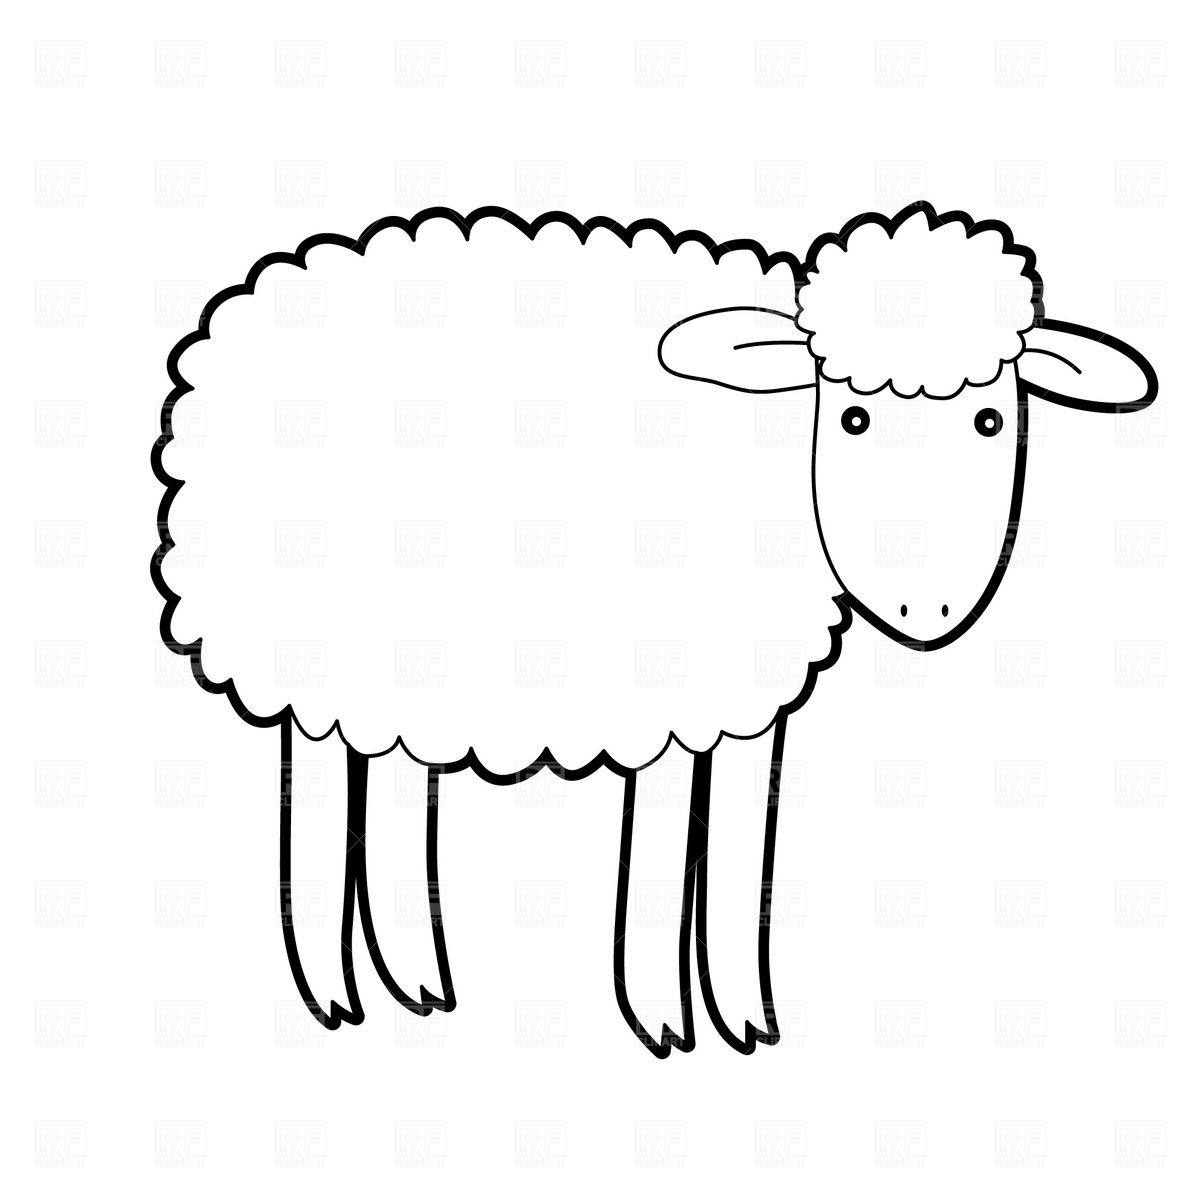 Free Clip Art of a Cartoon Sheep